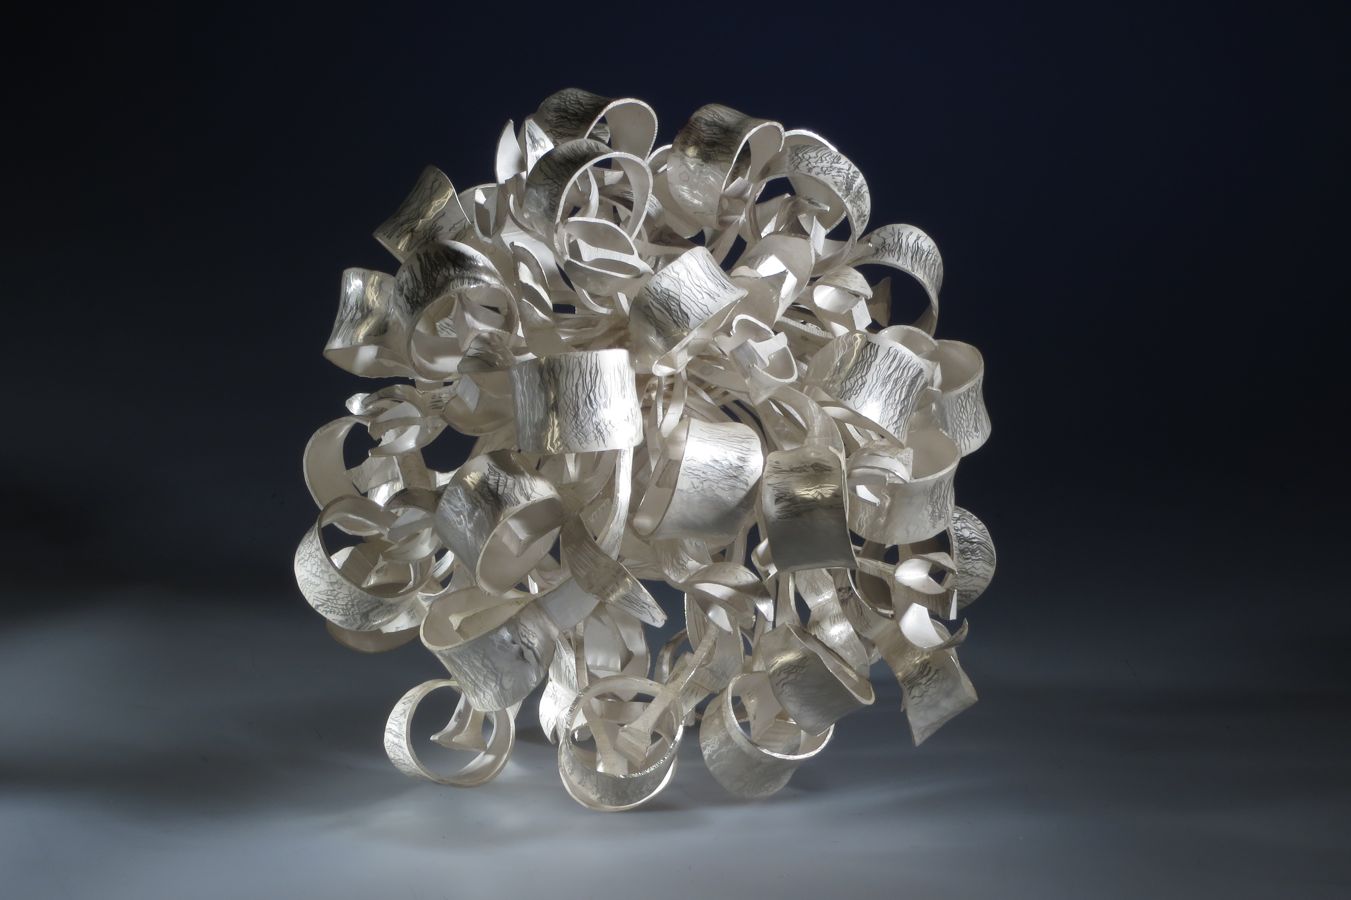 Piece -- materials: silver; dimensions: diameter 18, h 16 cm;